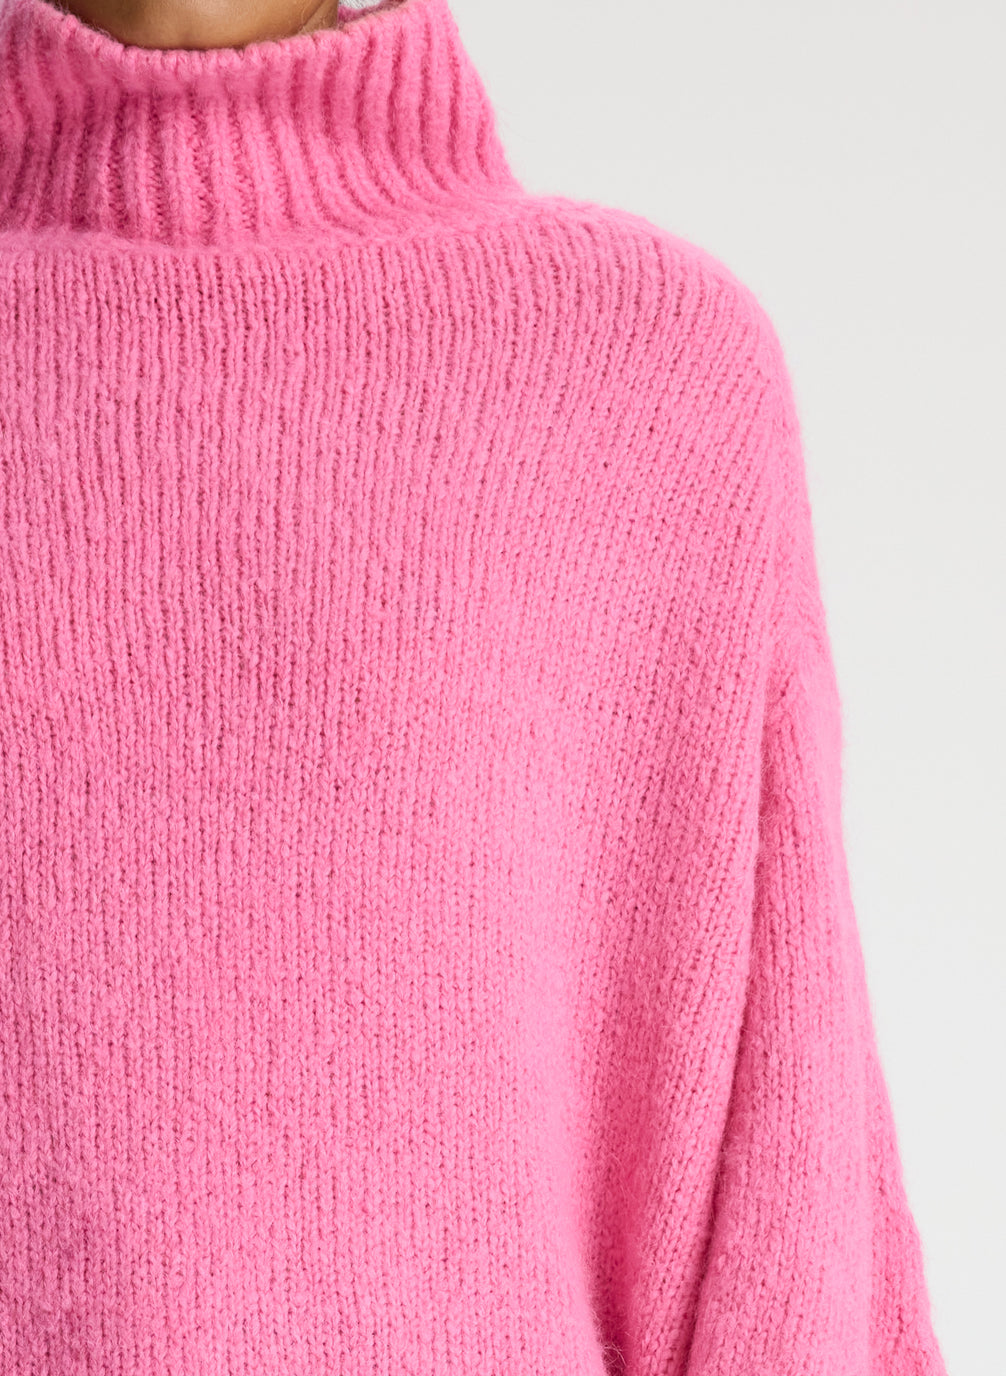 detail view of woman wearing pink turtleneck sweater and dark wash denim jeans